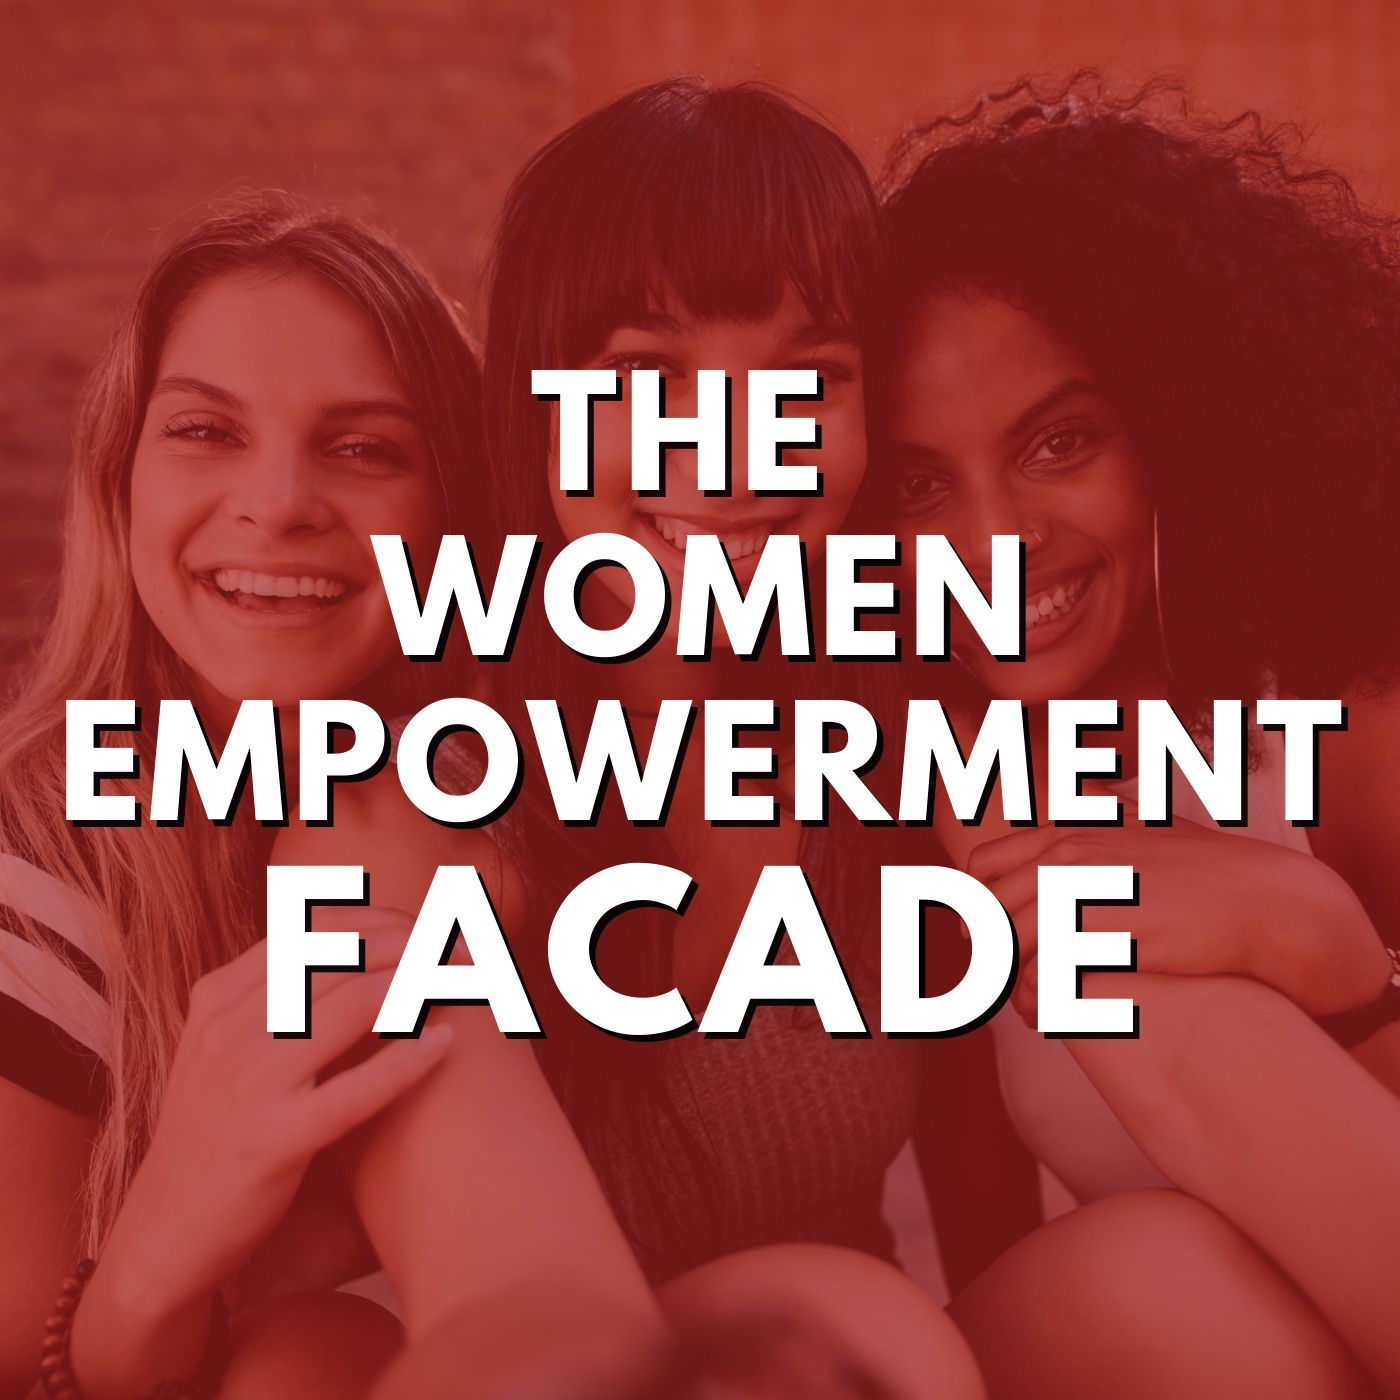 The Women Empowerment Facade